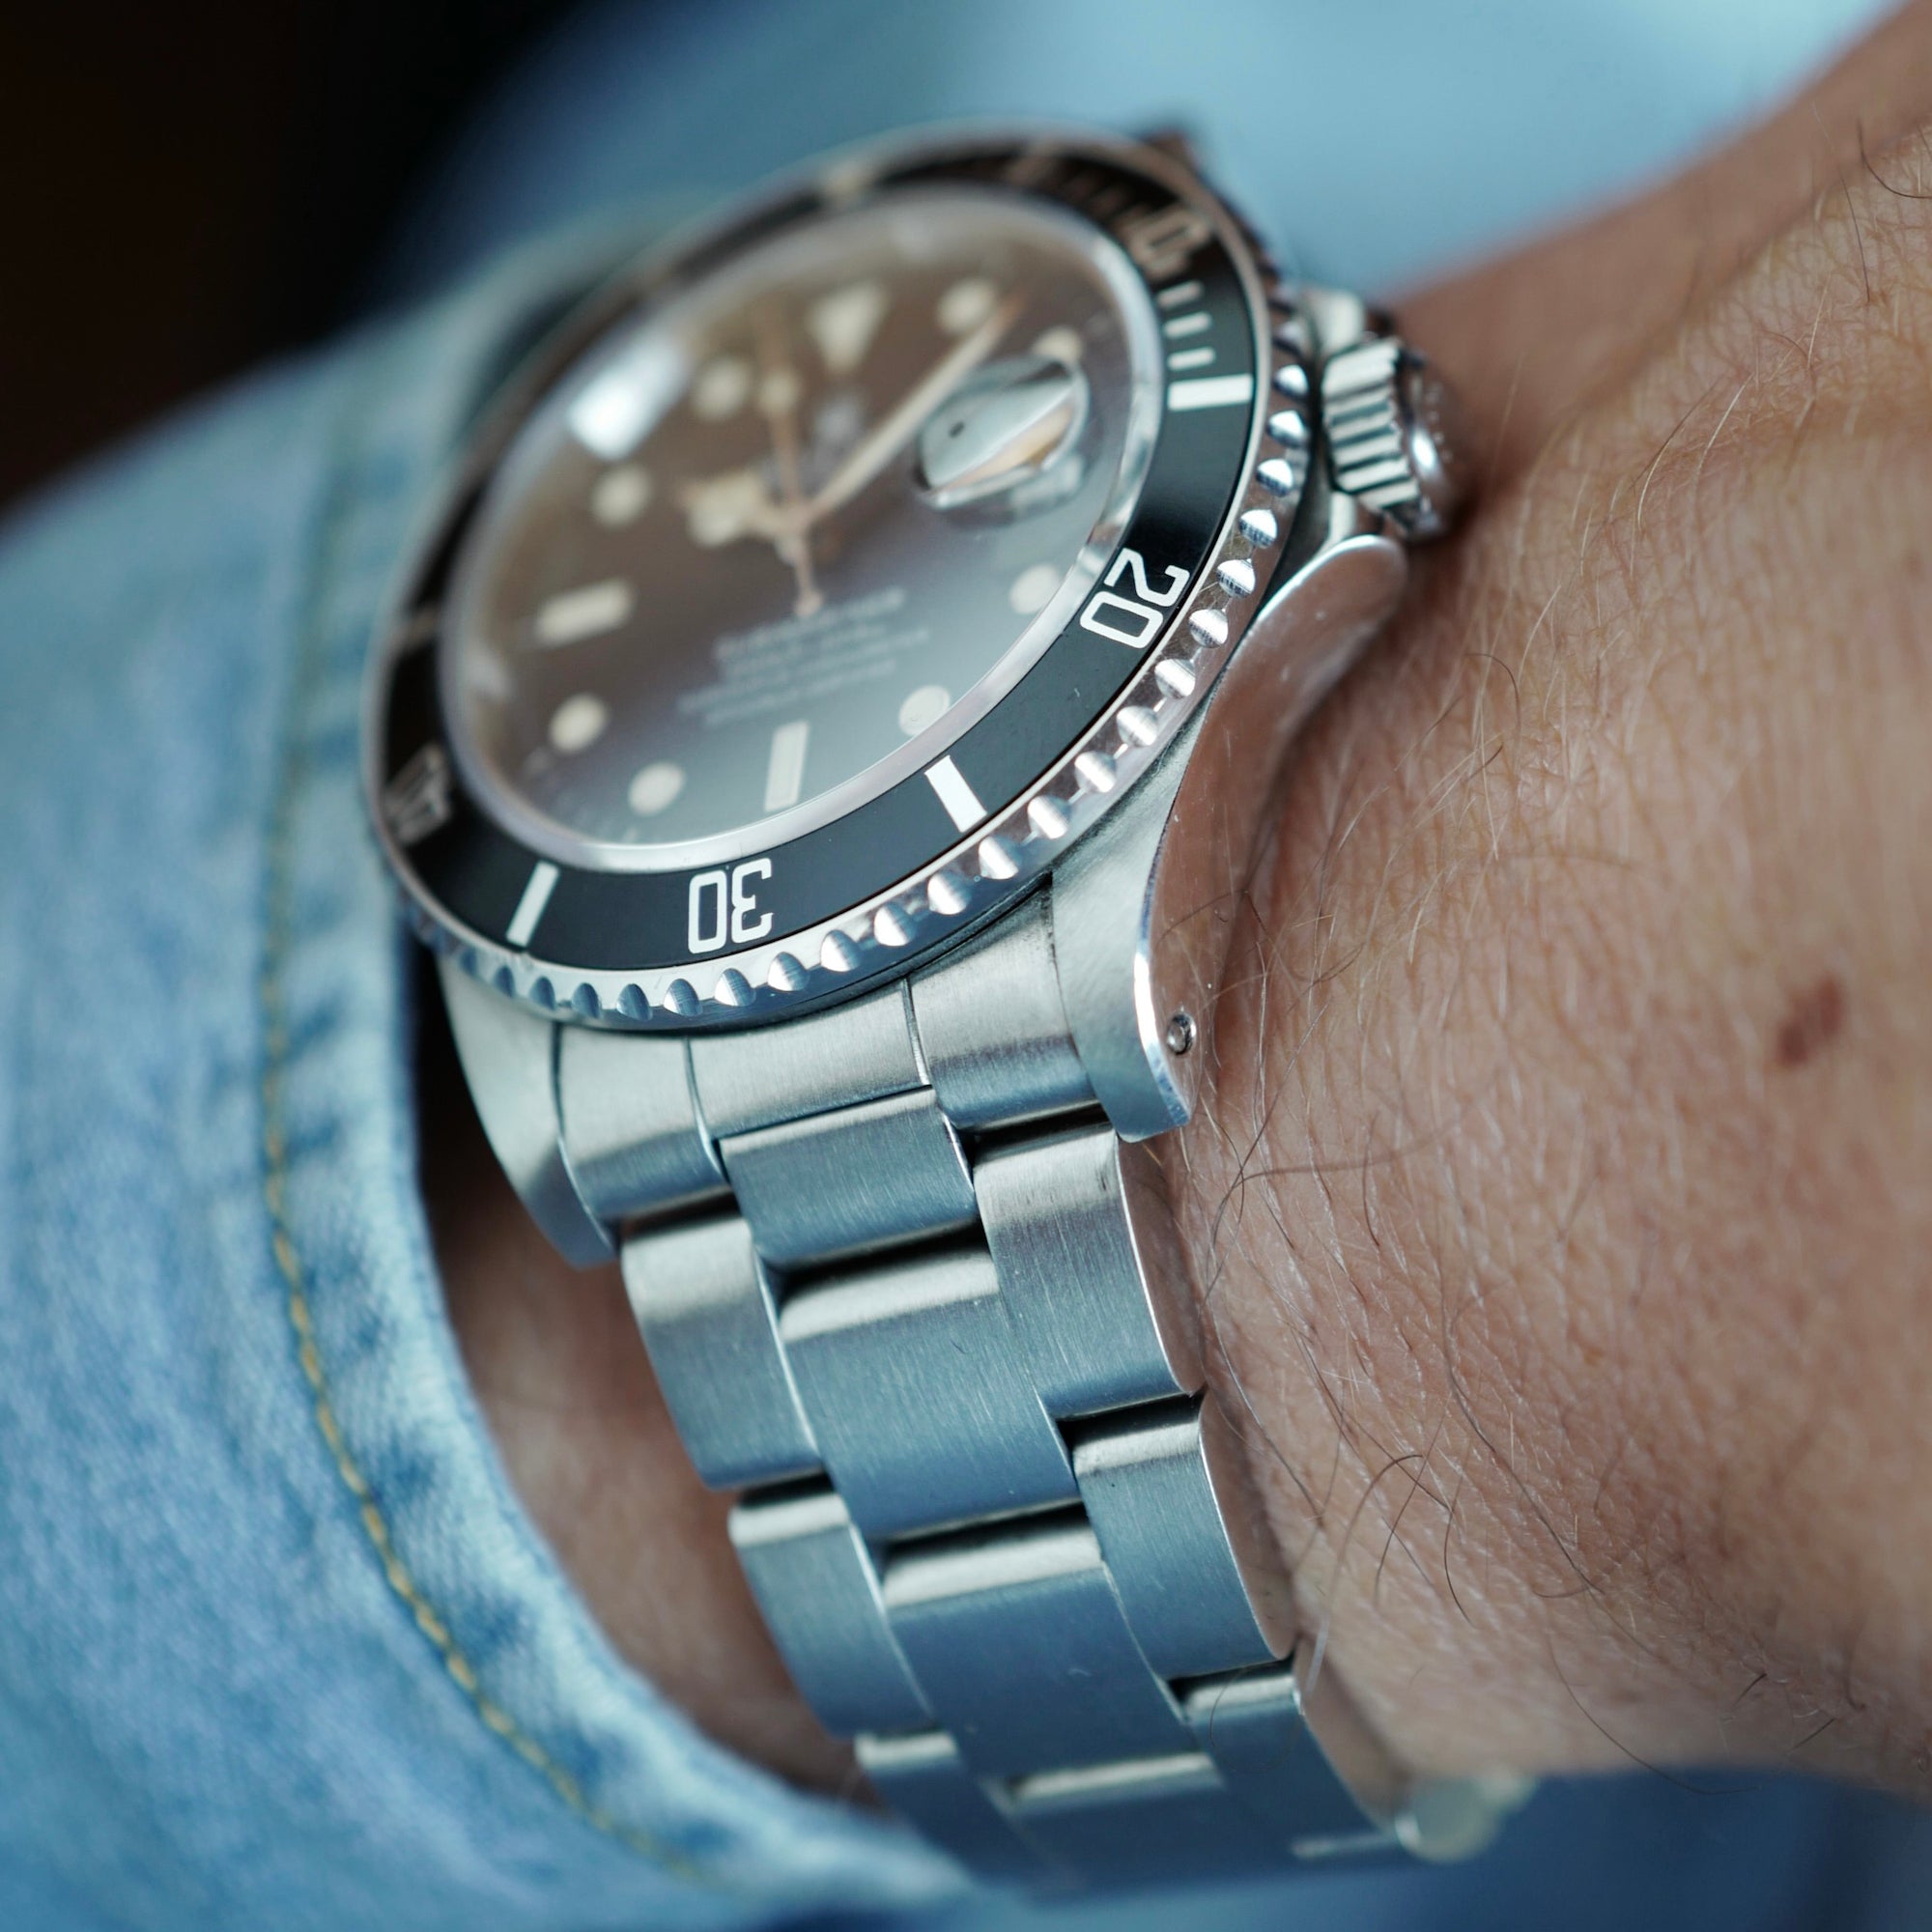 Rolex - Rolex Steel Submariner Ref. 168000 with Spider Dial - The Keystone Watches